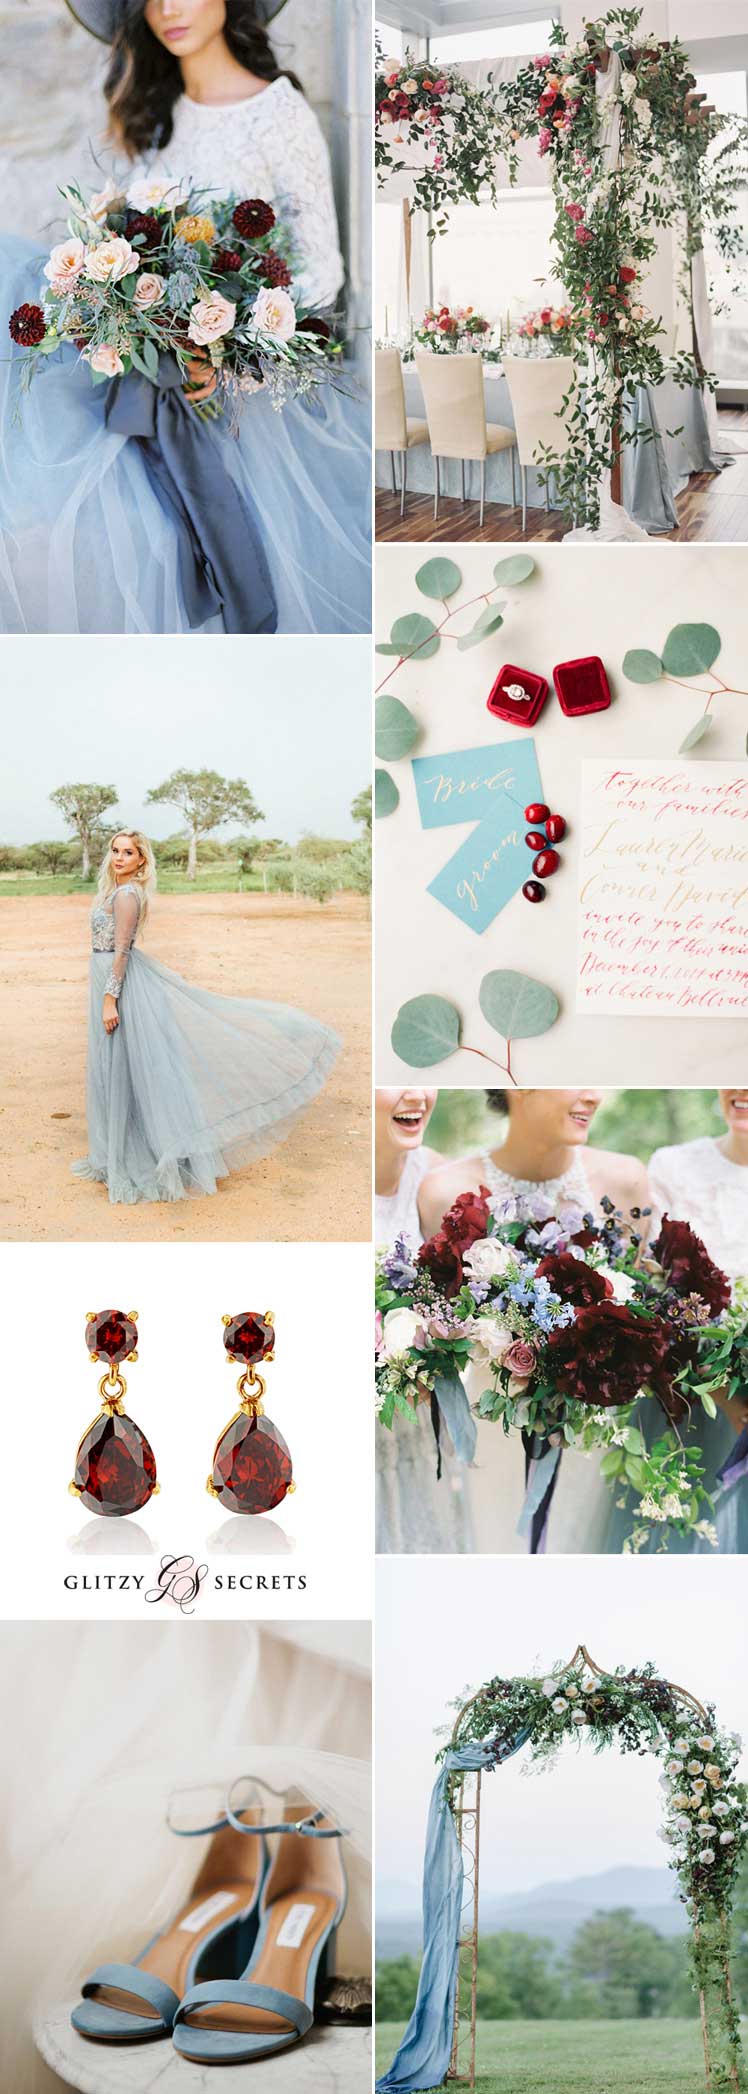 Burgundy and blue wedding colour scheme ideas